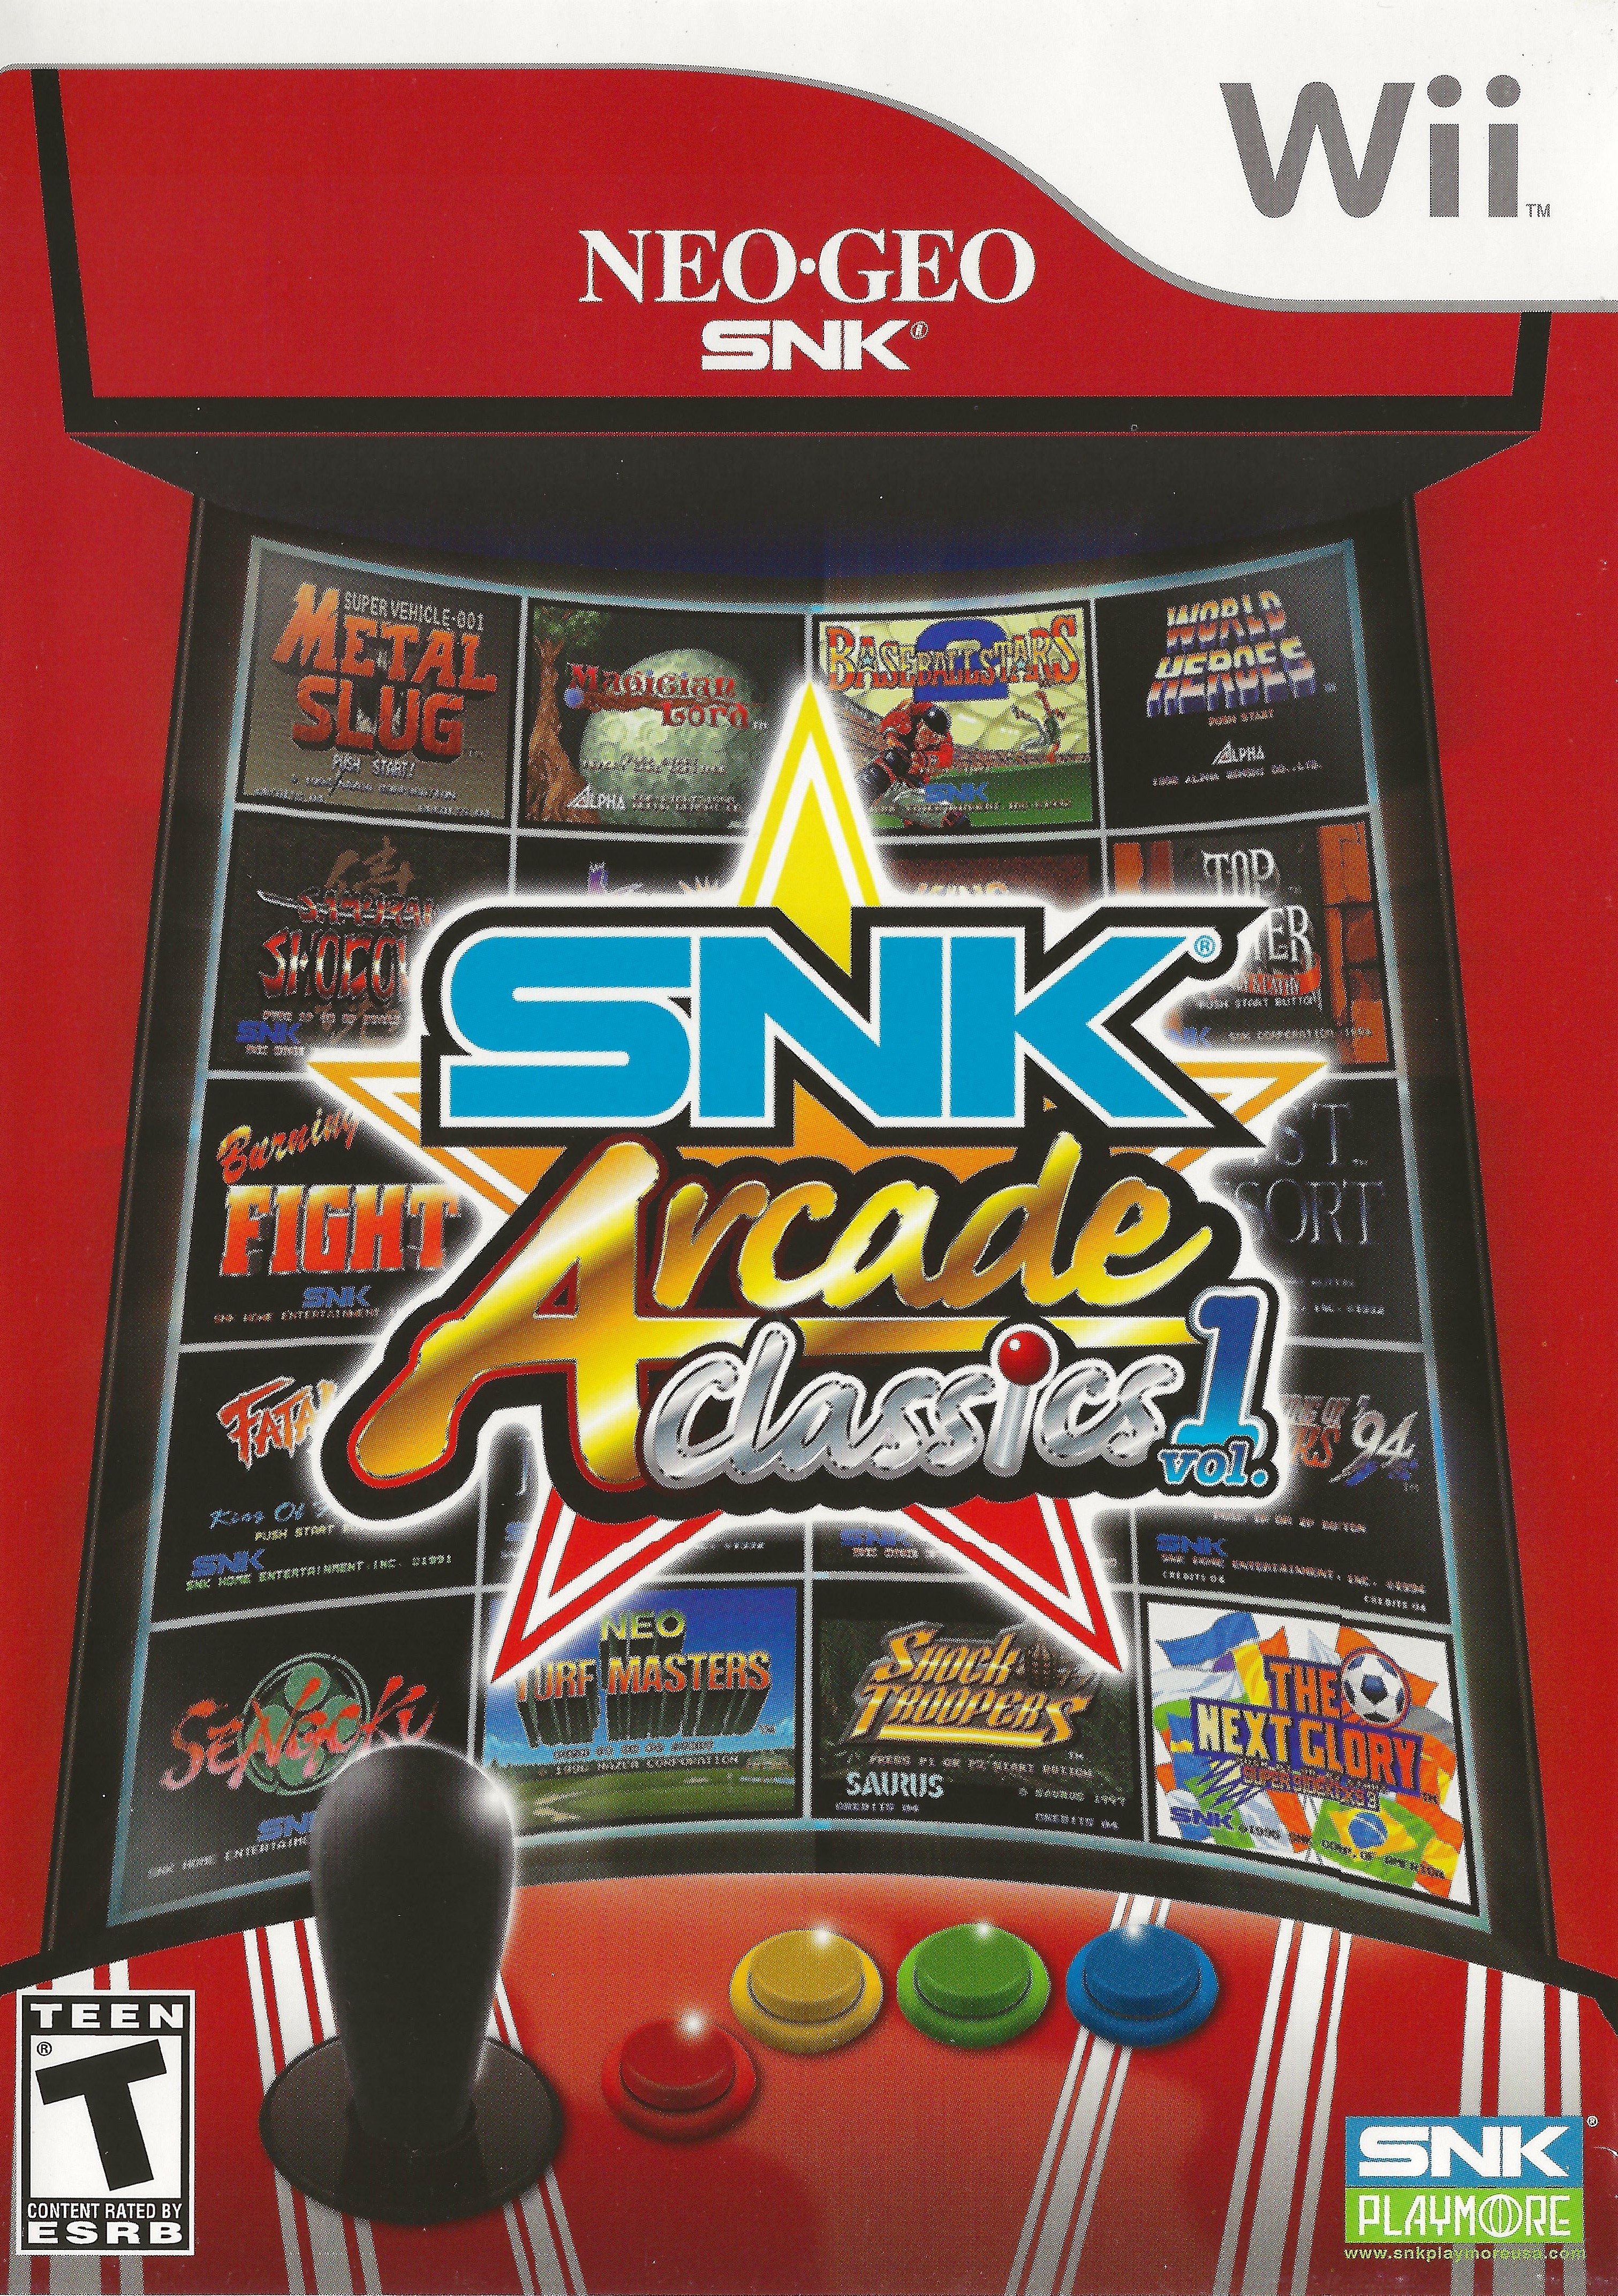 'SNK Arcade classics Volume 1'